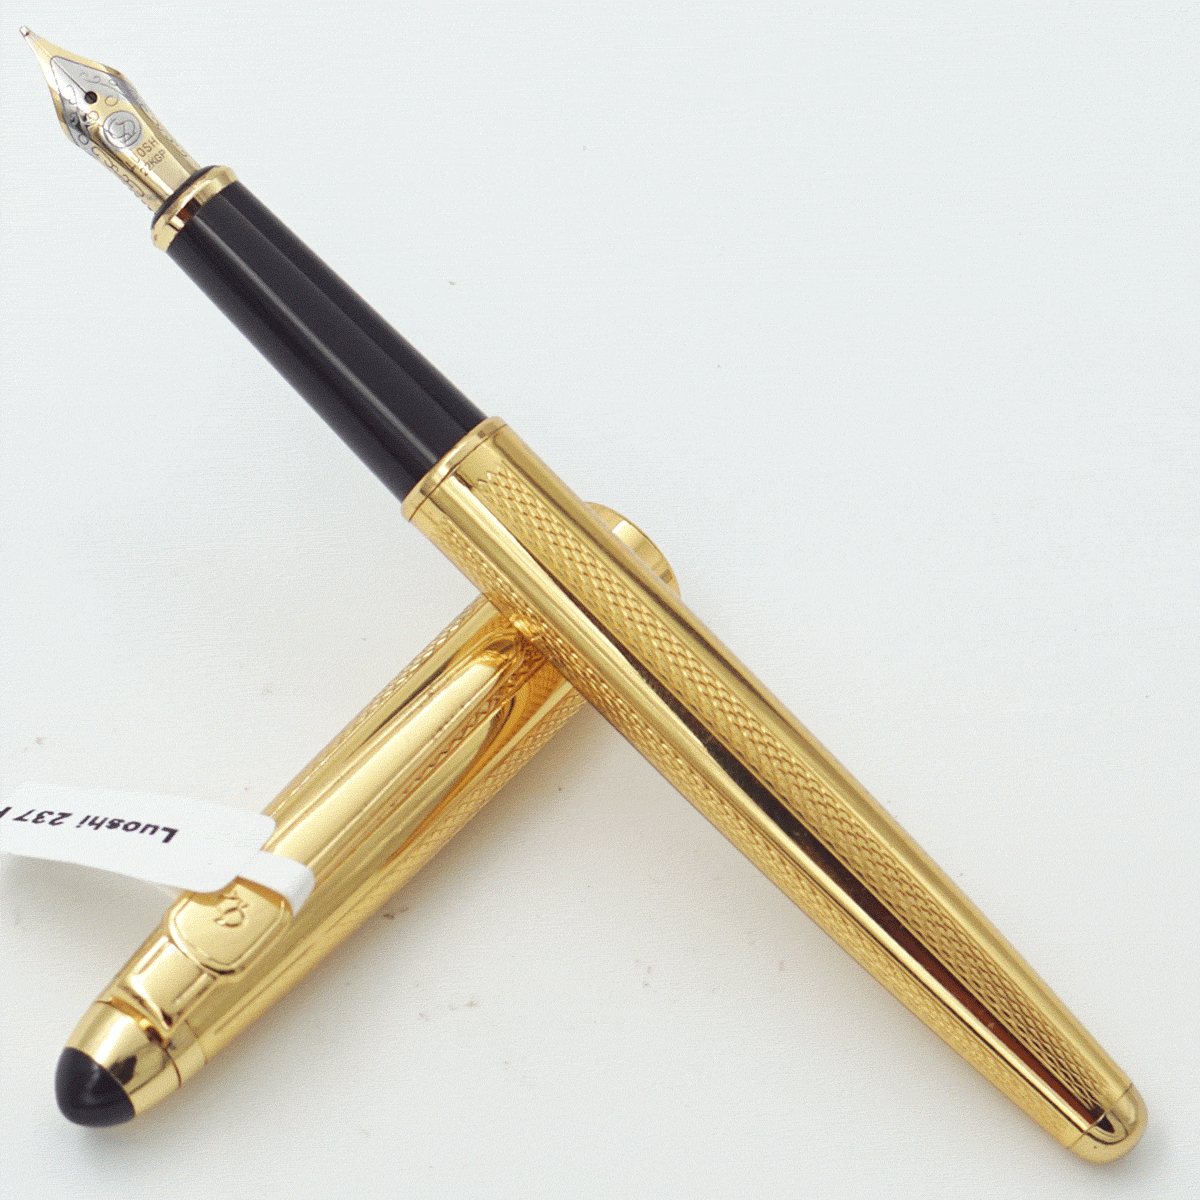 Luoshi 237 Gold Color Design Body With Golden Color Design Cap And Black Color Grip Fine Nib Converter Type Fountain Pen SKU 23939